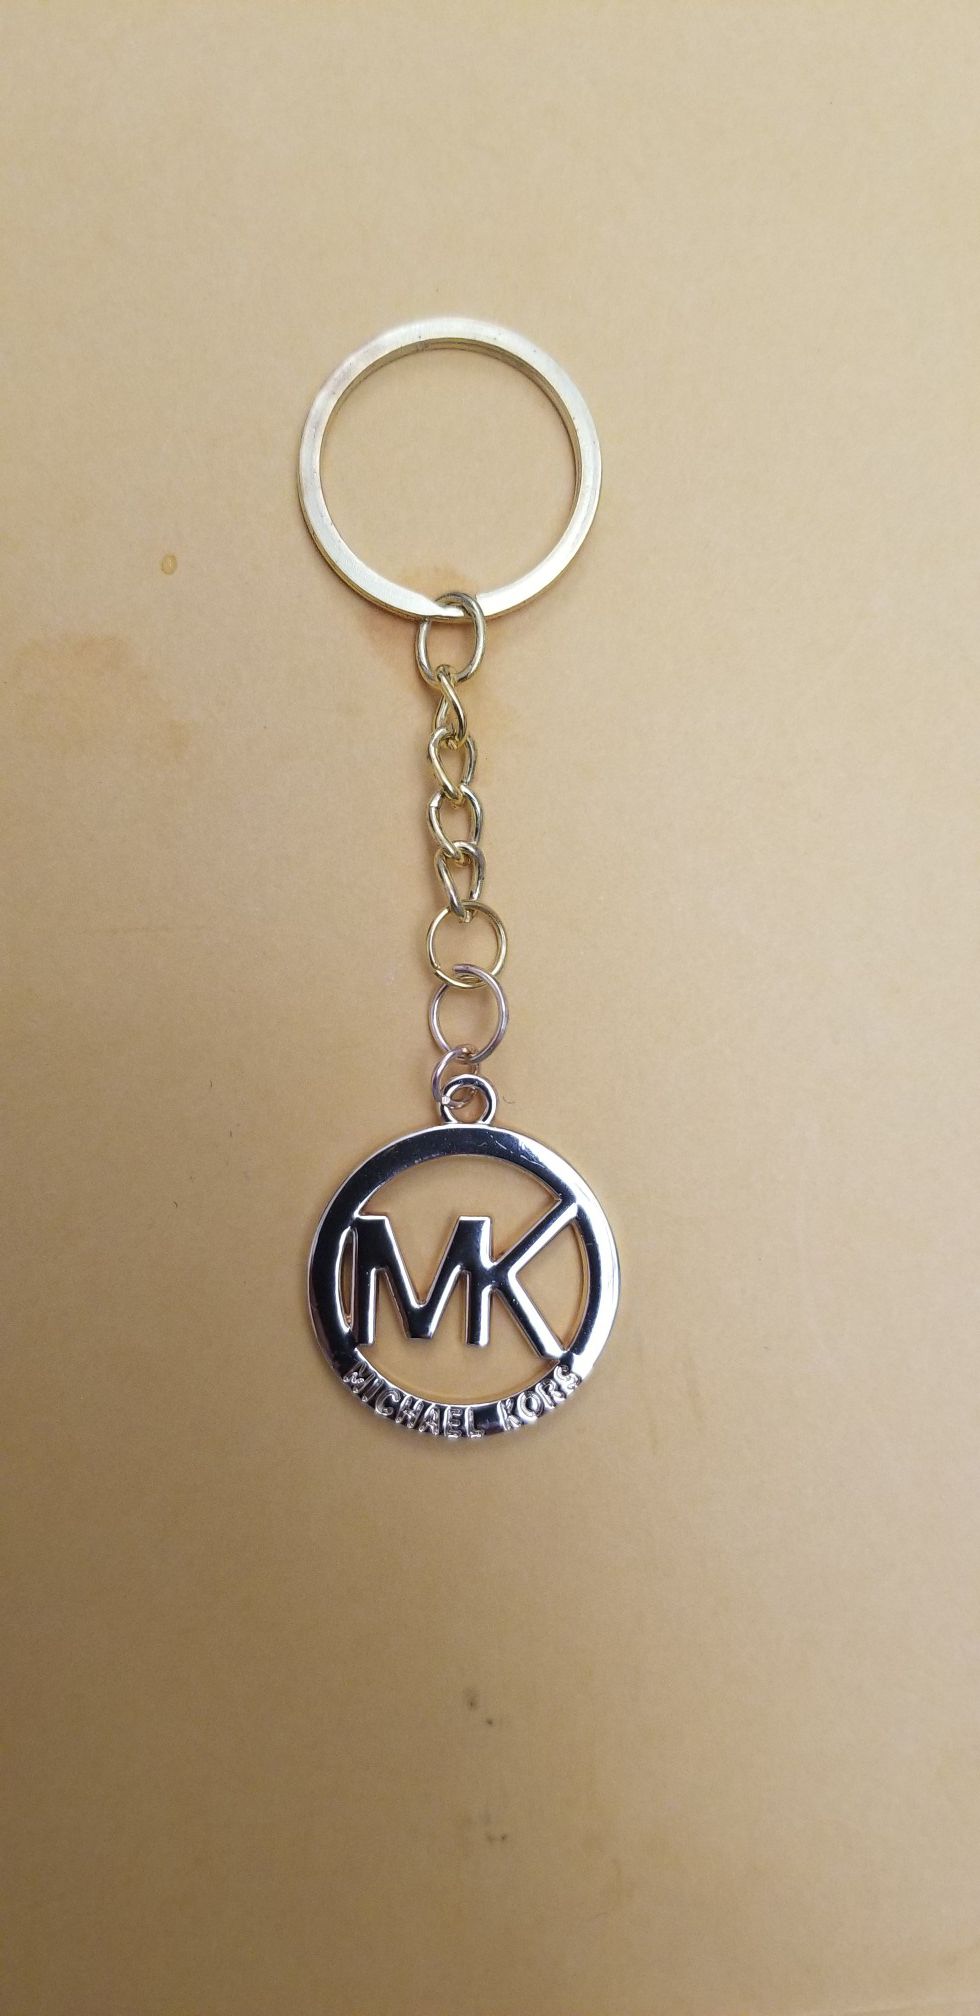 Mk keychain